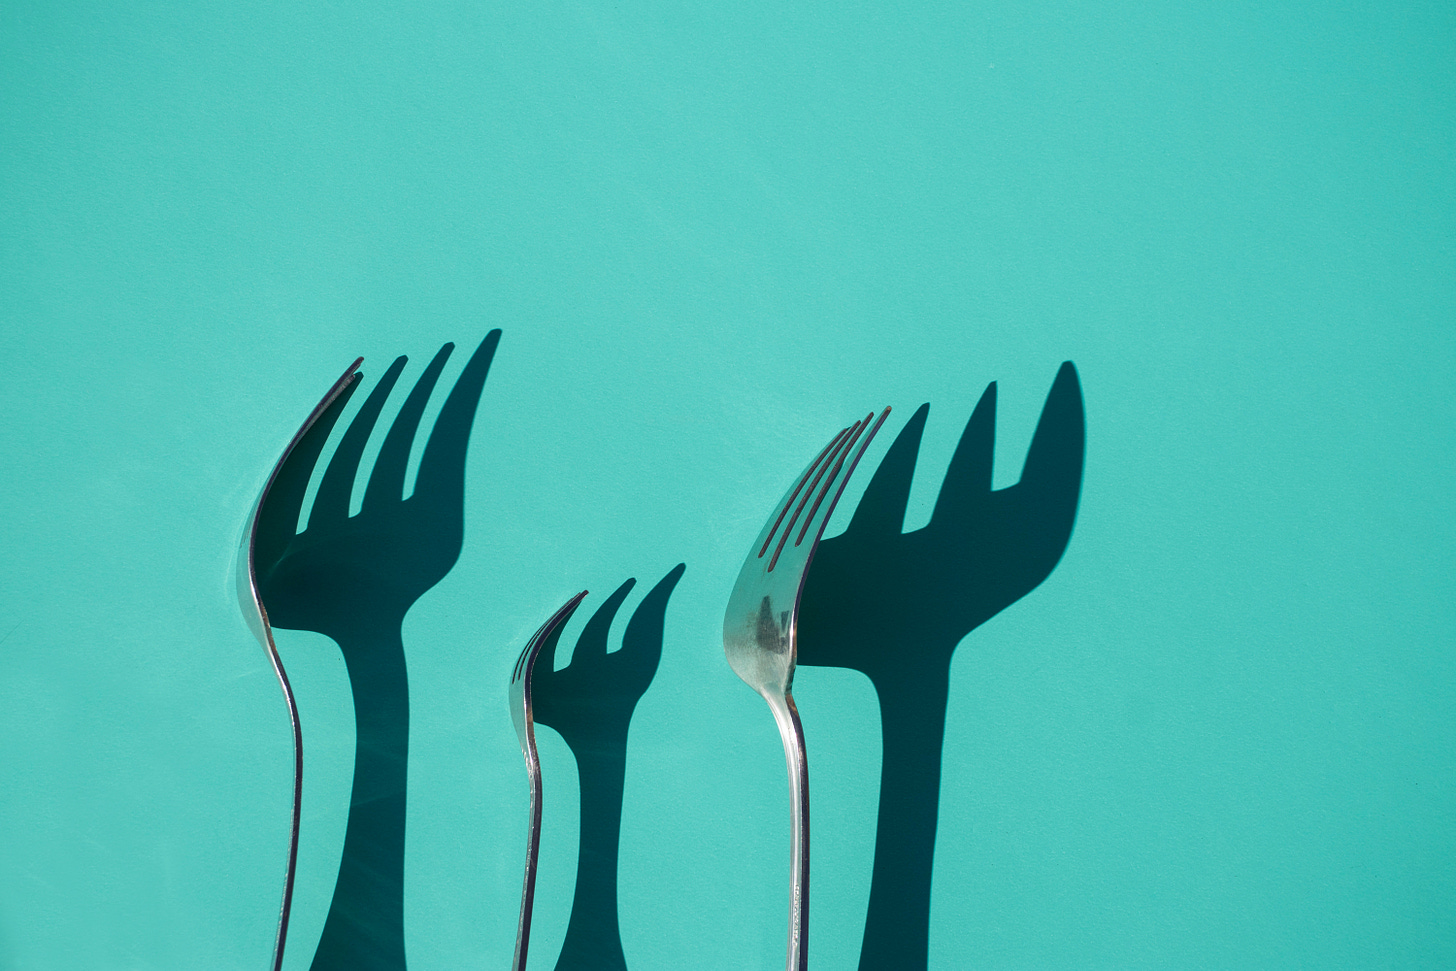 Three forks on their sides casting shadows